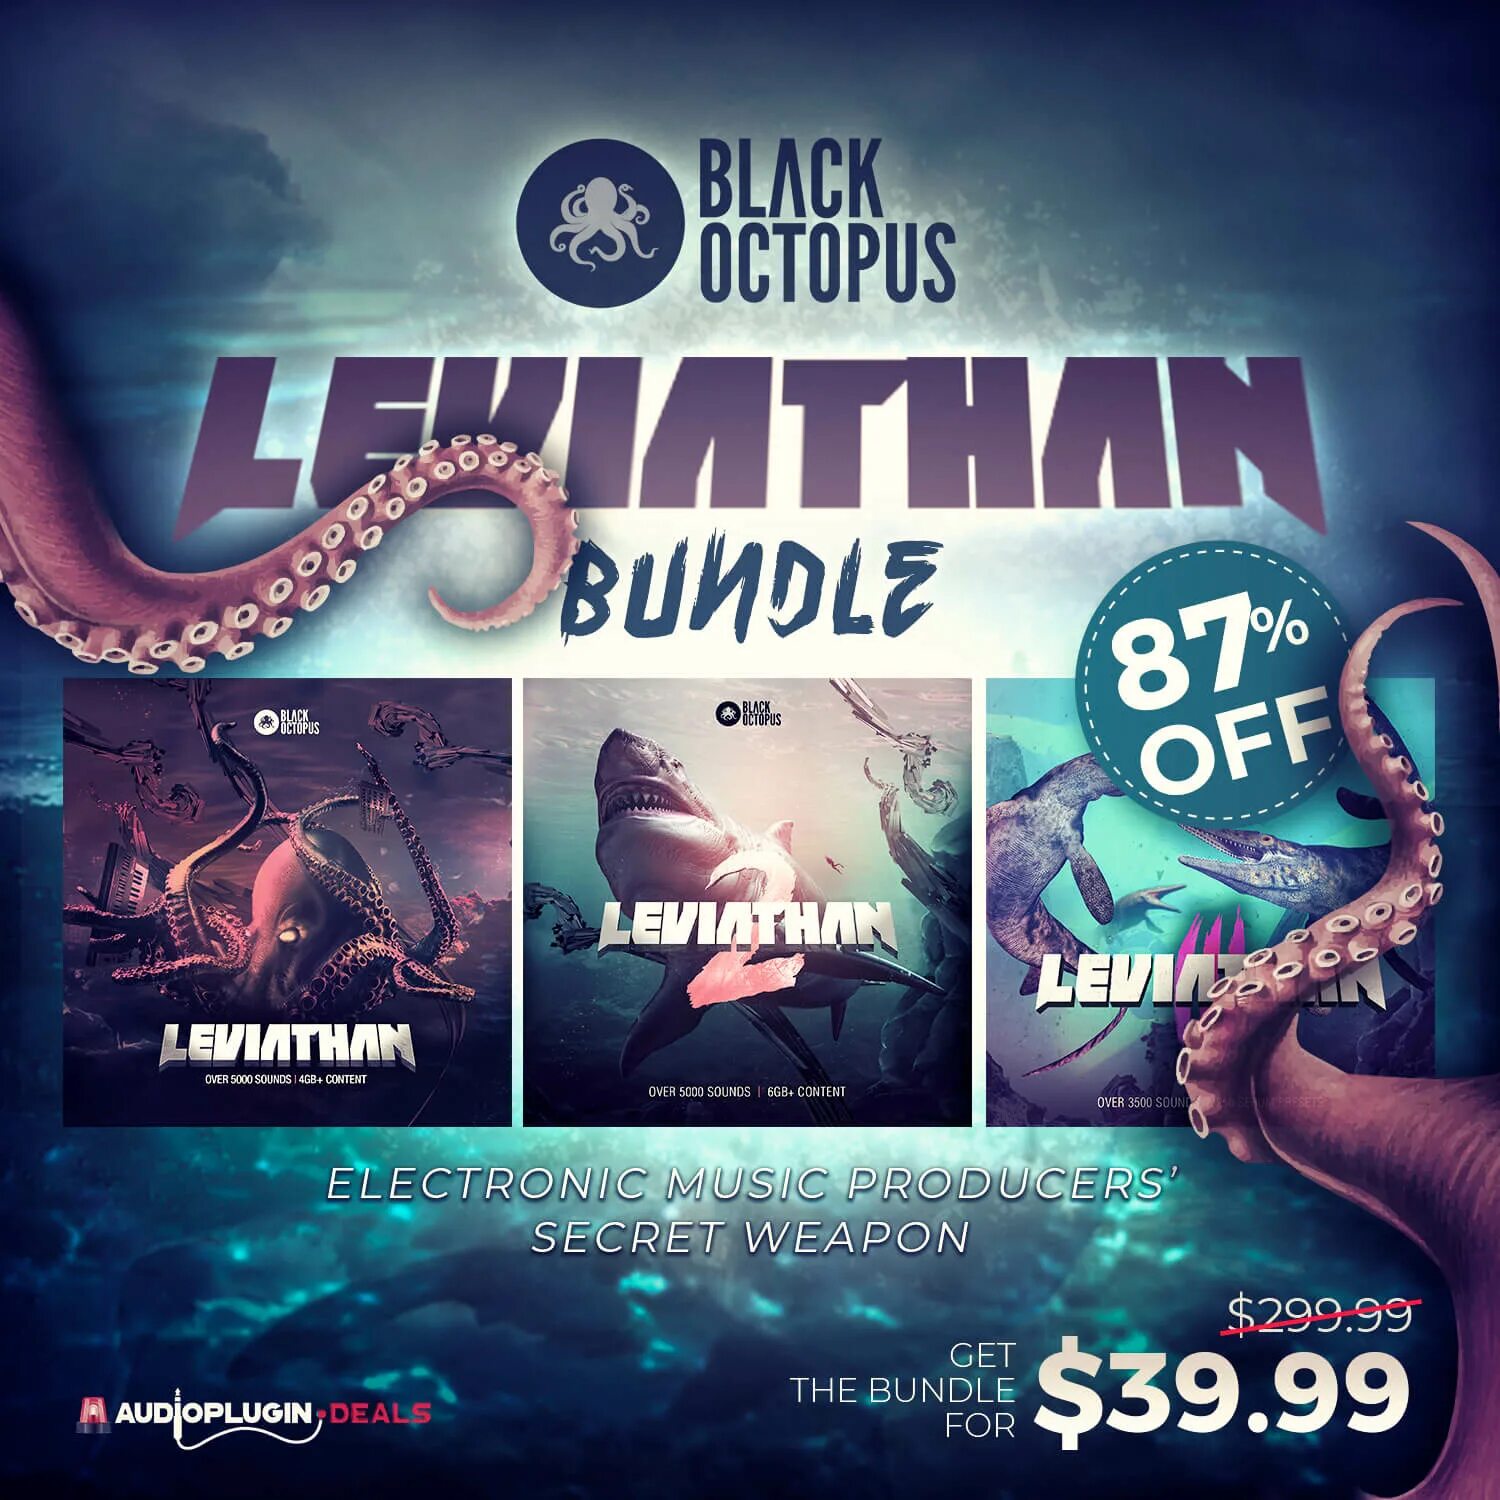 Black octopus sound. Black Octopus Sound - Leviathan. Black Octopus Sound - Leviathan 3. Black Octopus Sound - Arctic Chill.